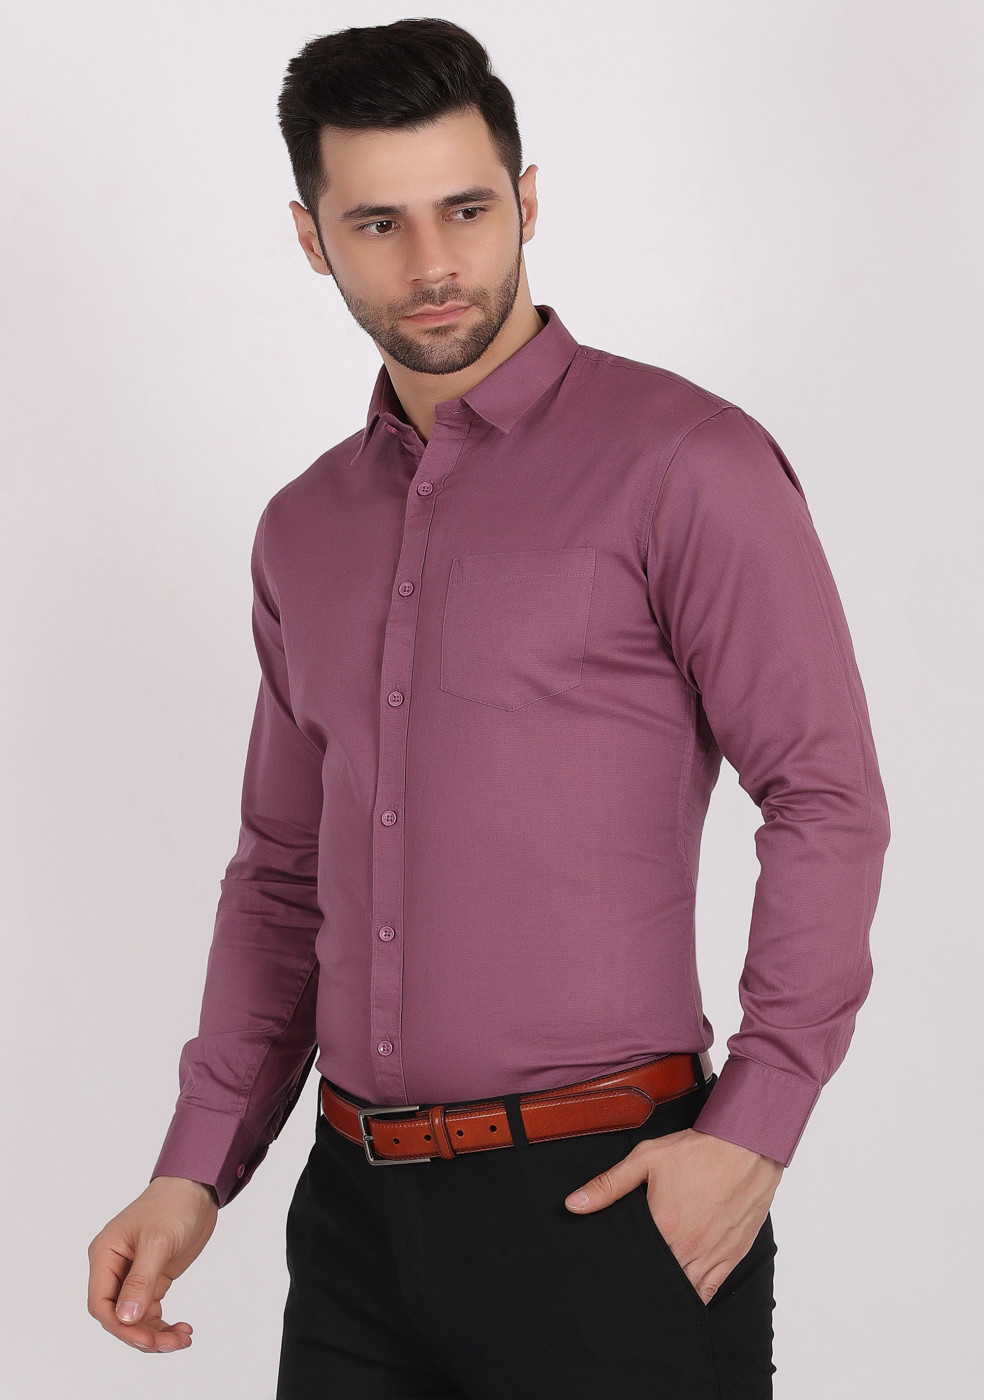 ASHTOM Onion Color Plain Cotton Shirt For Men